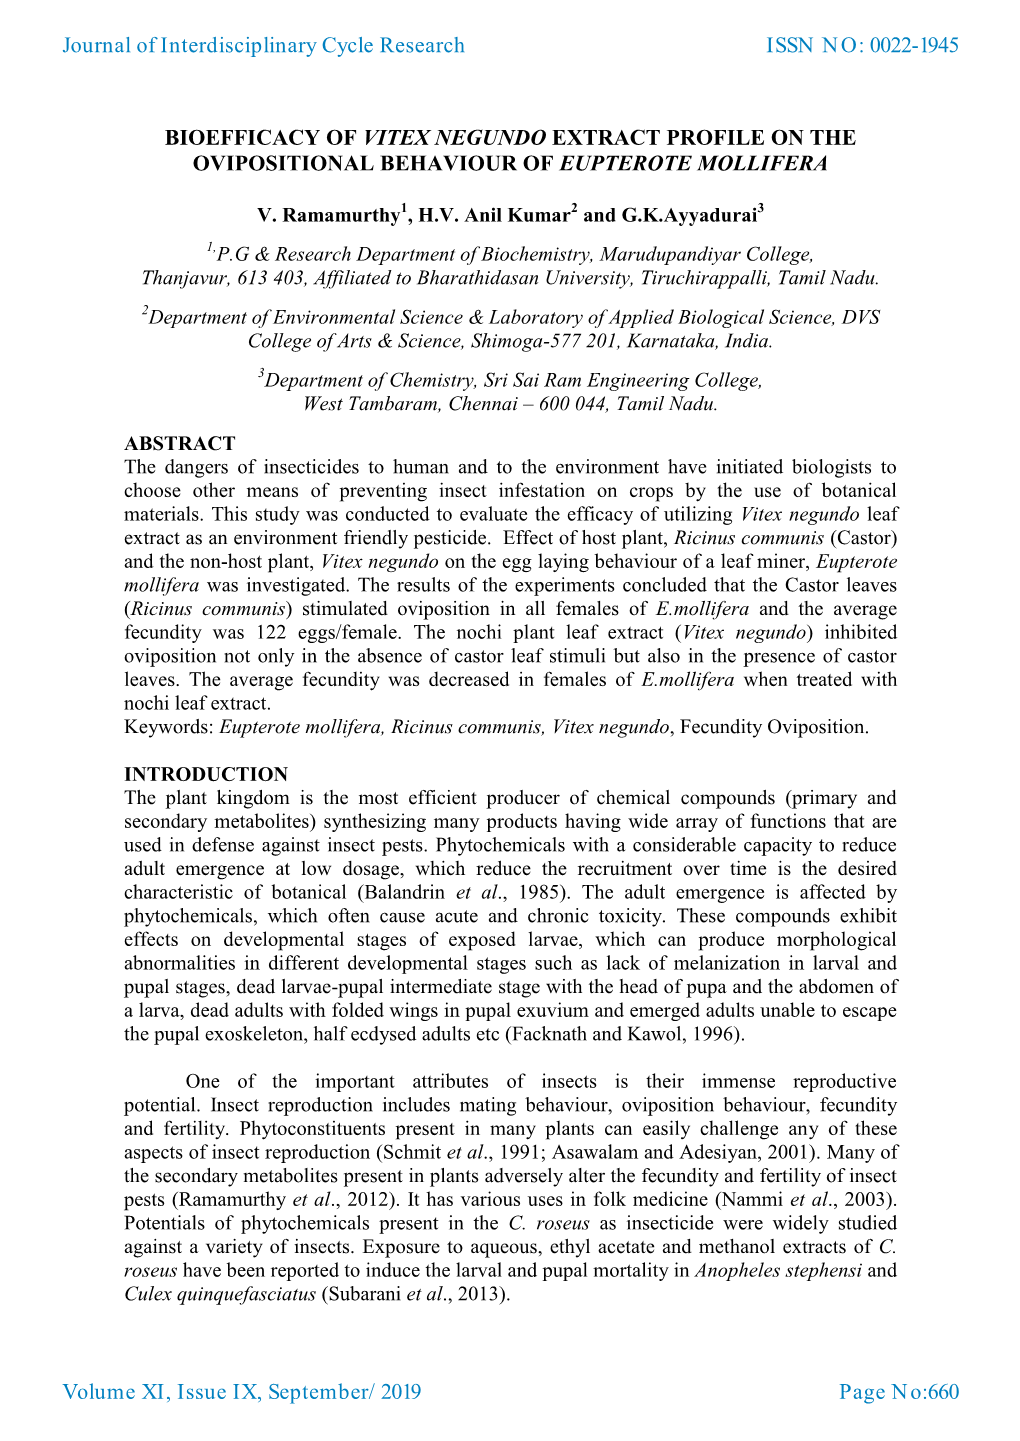 Bioefficacy of Vitex Negundo Extract Profile on the Ovipositional Behaviour of Eupterote Mollifera